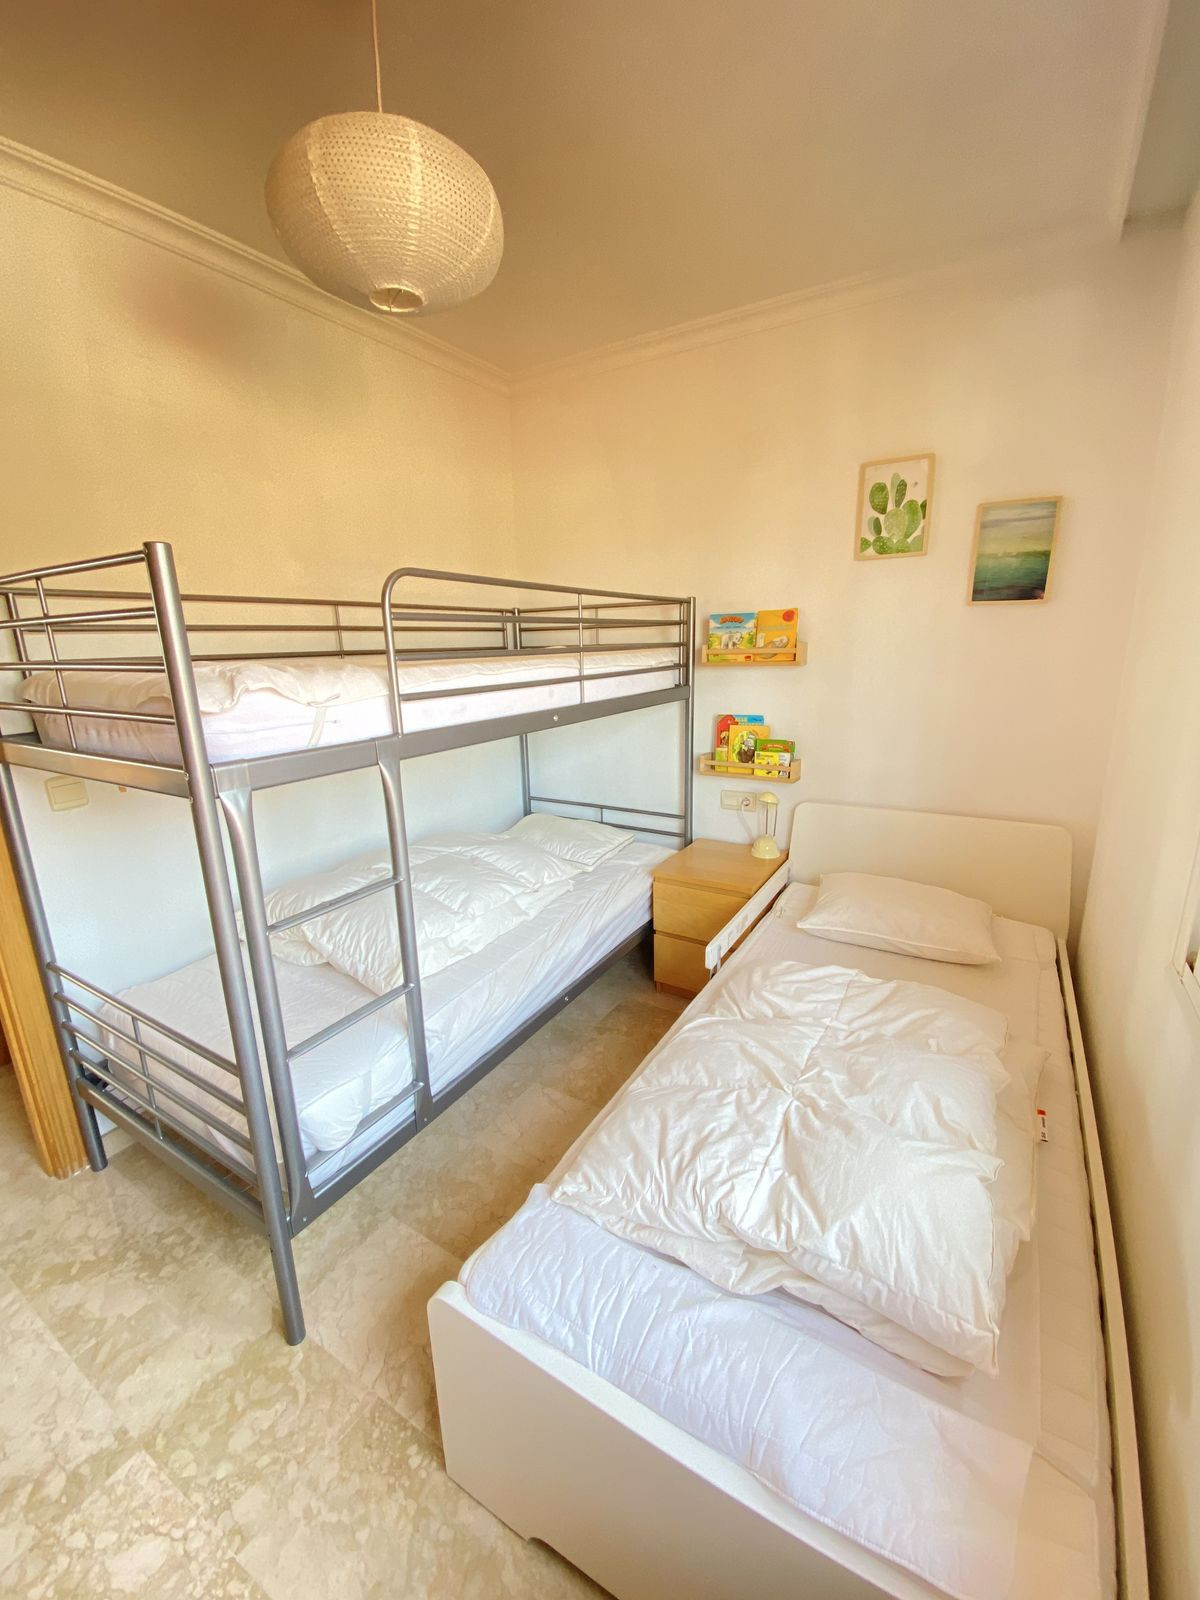 2 bedroom Apartment For Sale in Riviera del Sol, Málaga - thumb 12